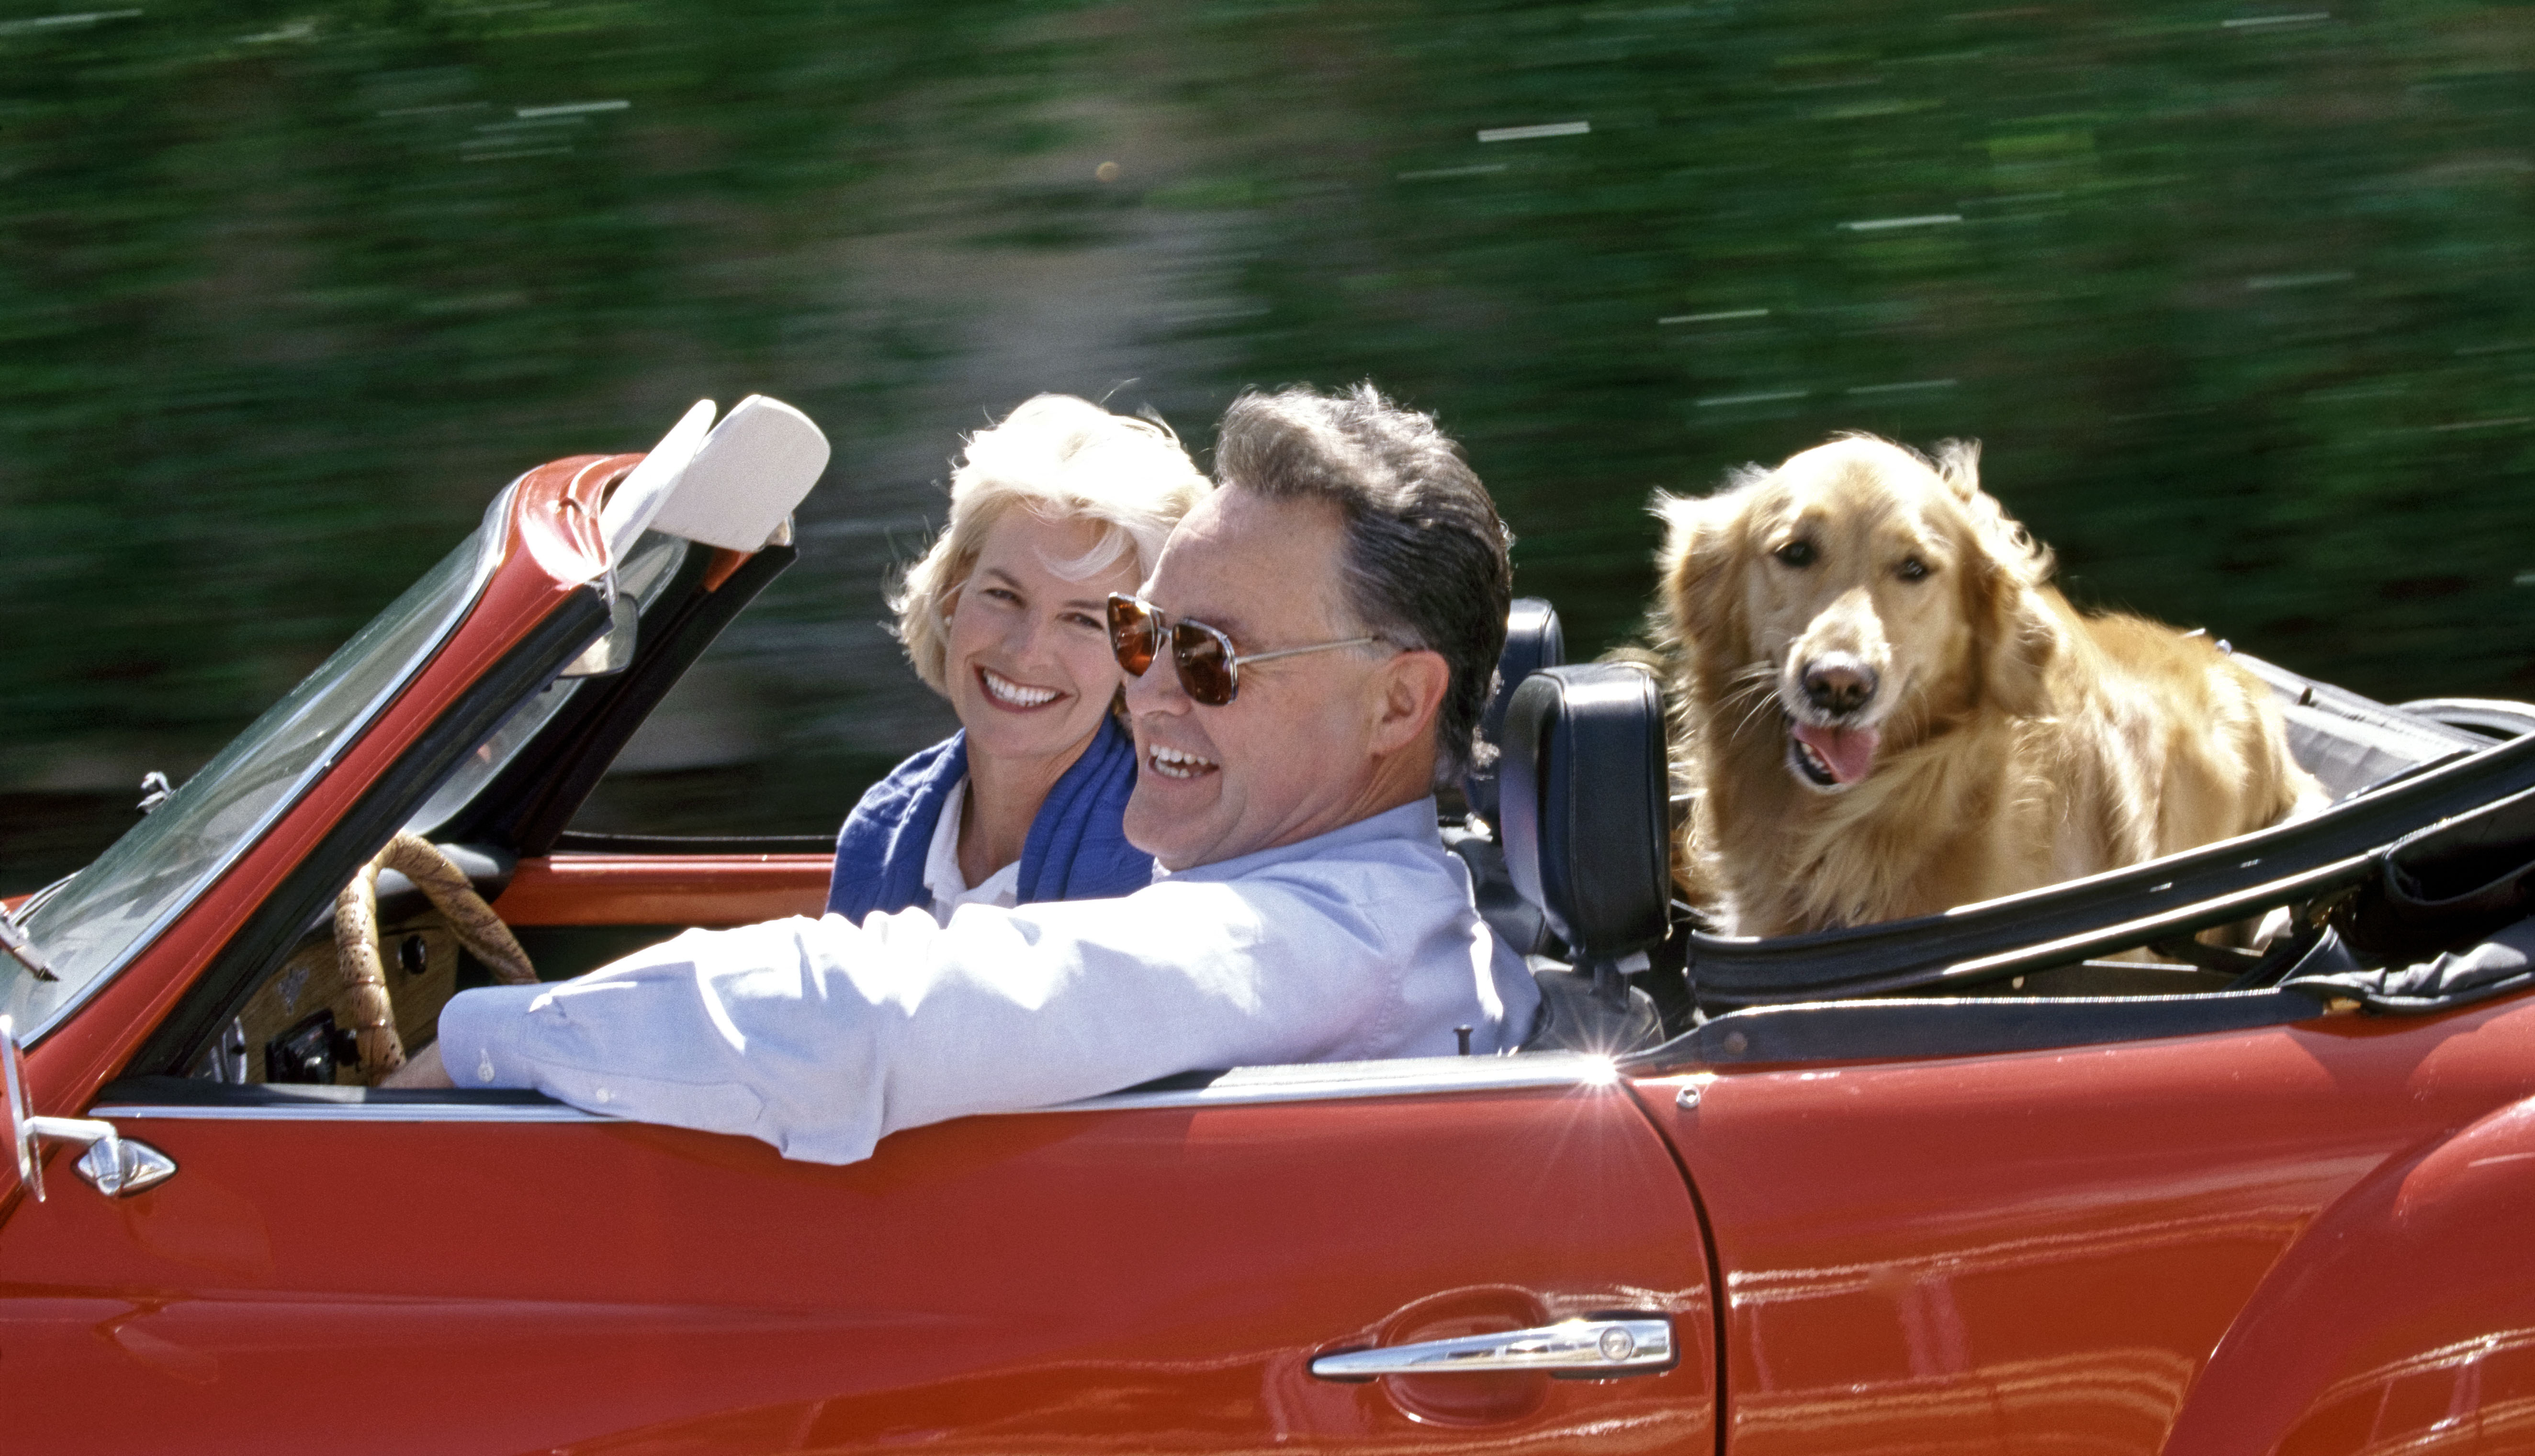 A couple enjoys a drive with their dog.